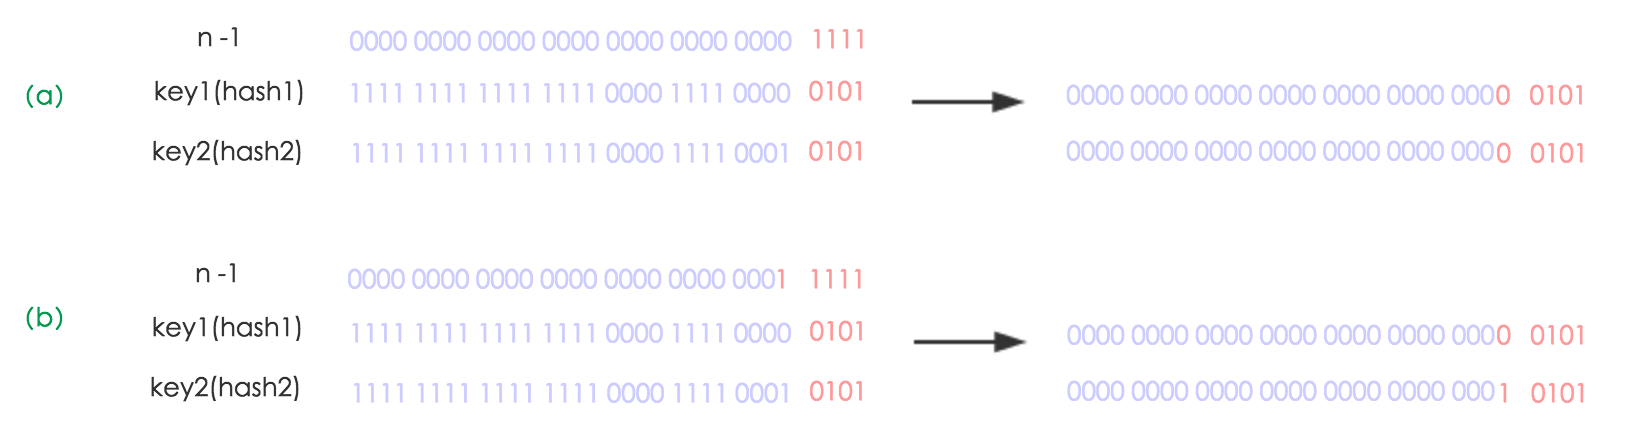 hashMap 1.8 Hash algorithm example Figure 1